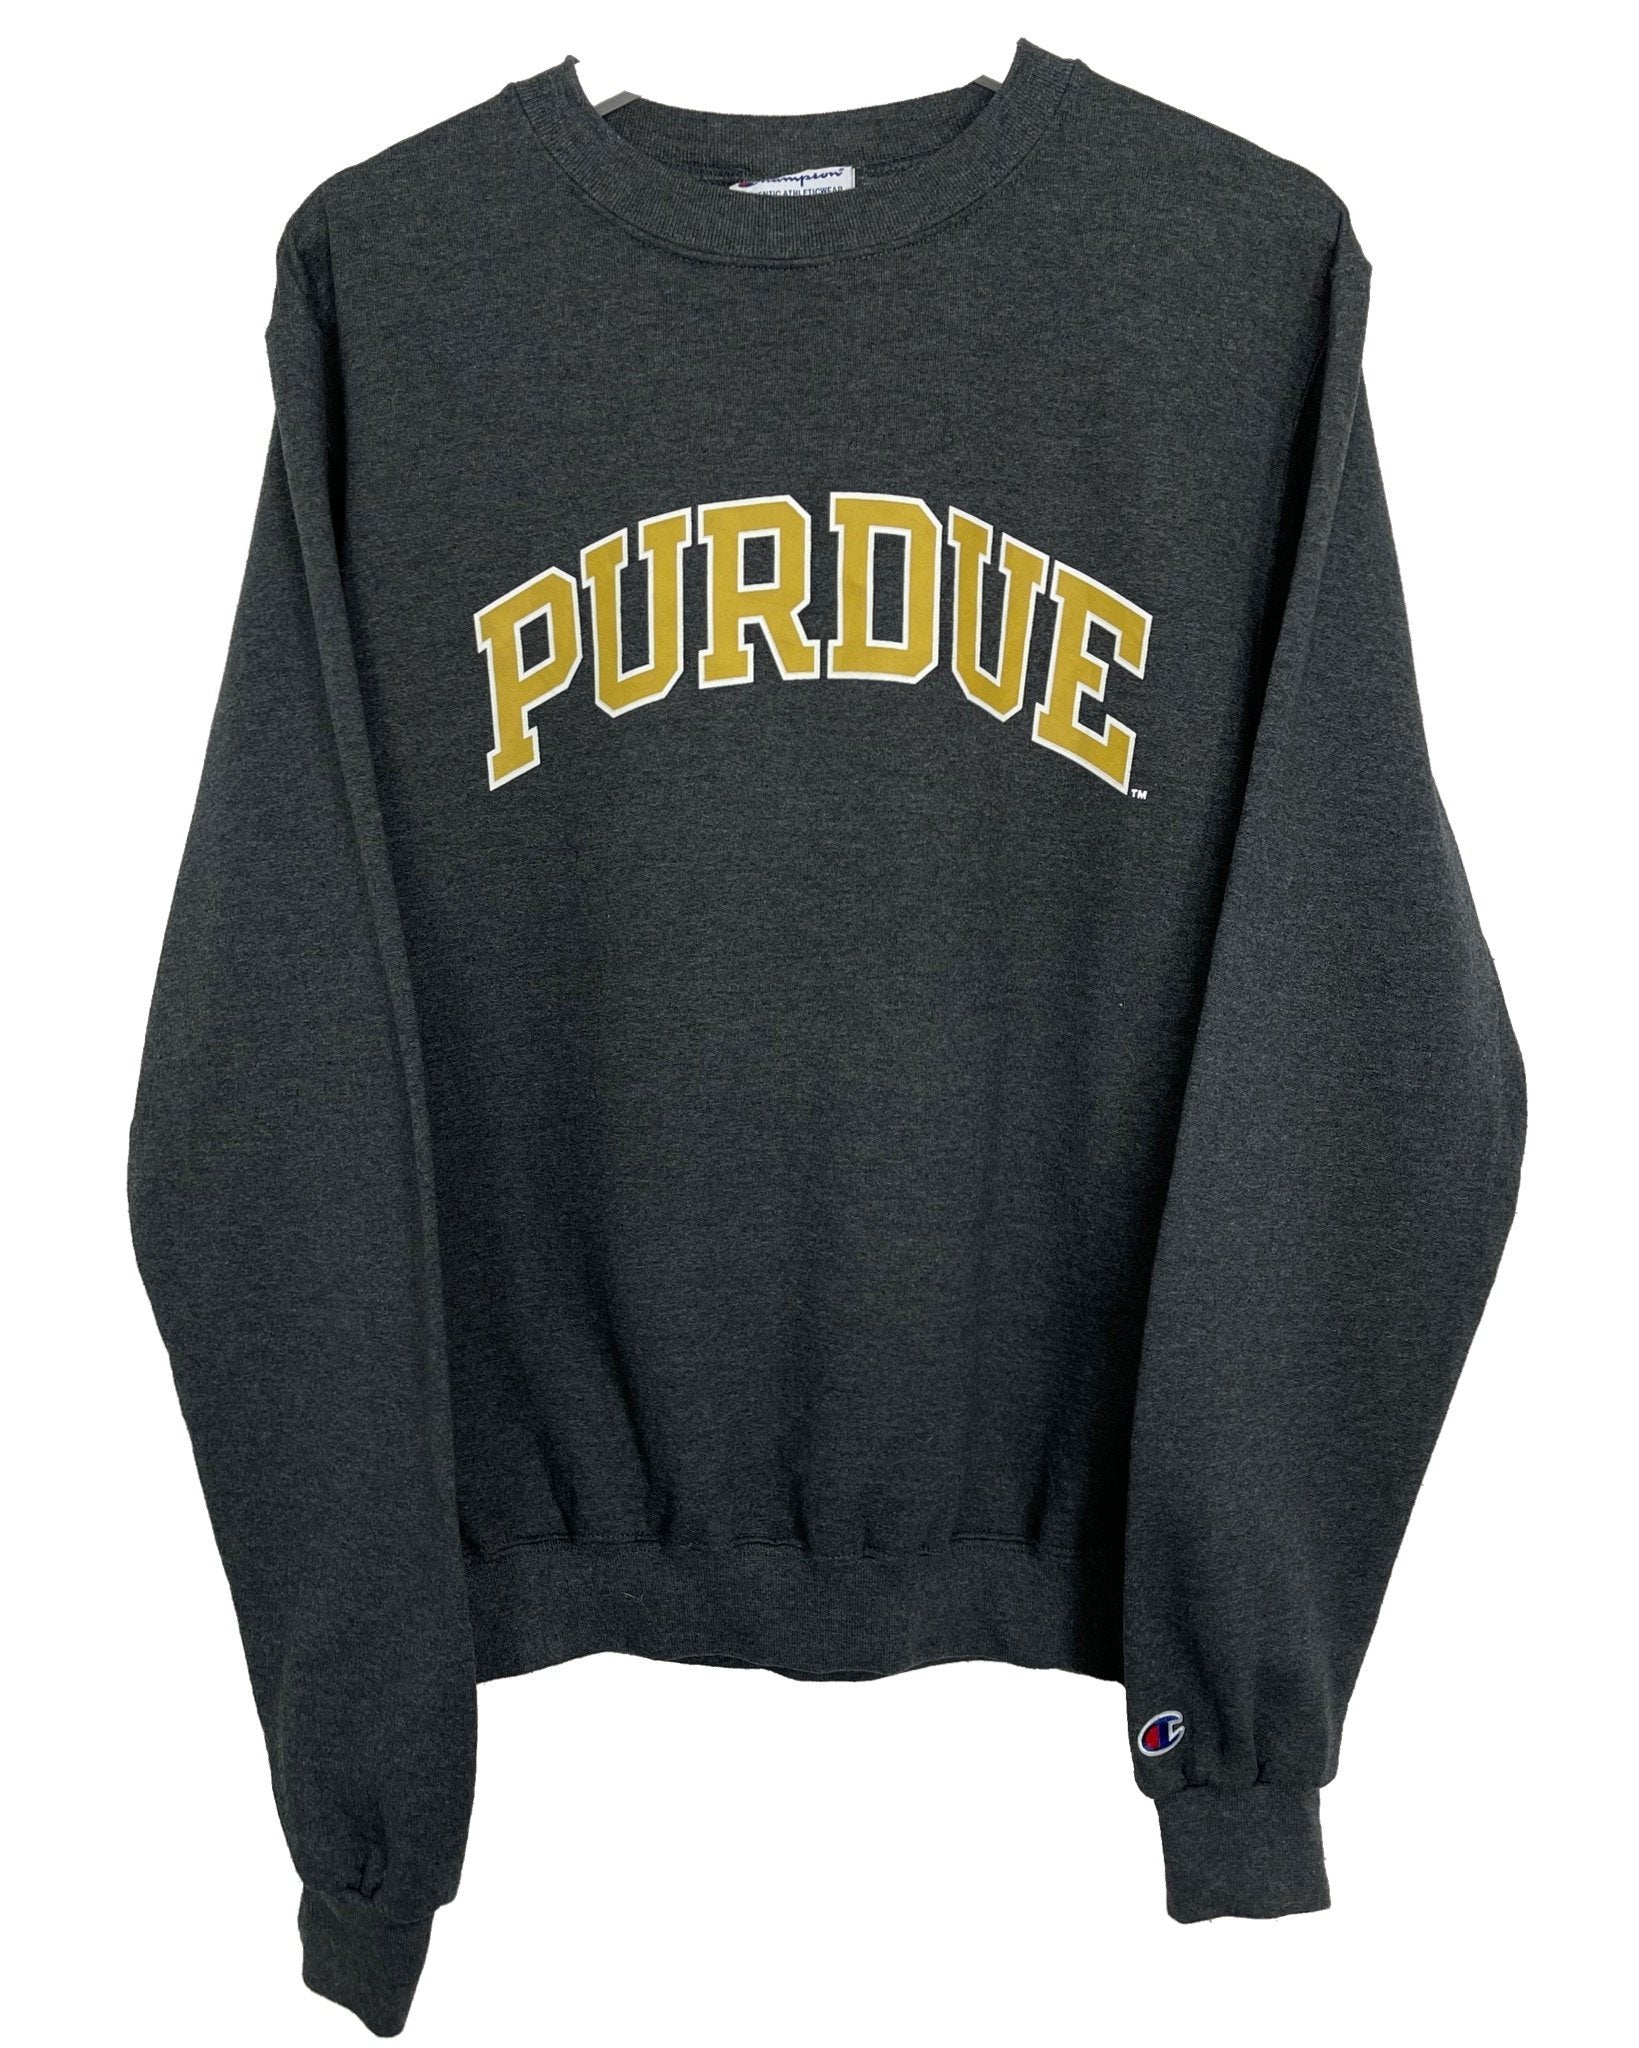  Sweatshirt Champion Sweat - Purdue University - S - PLOMOSTORE